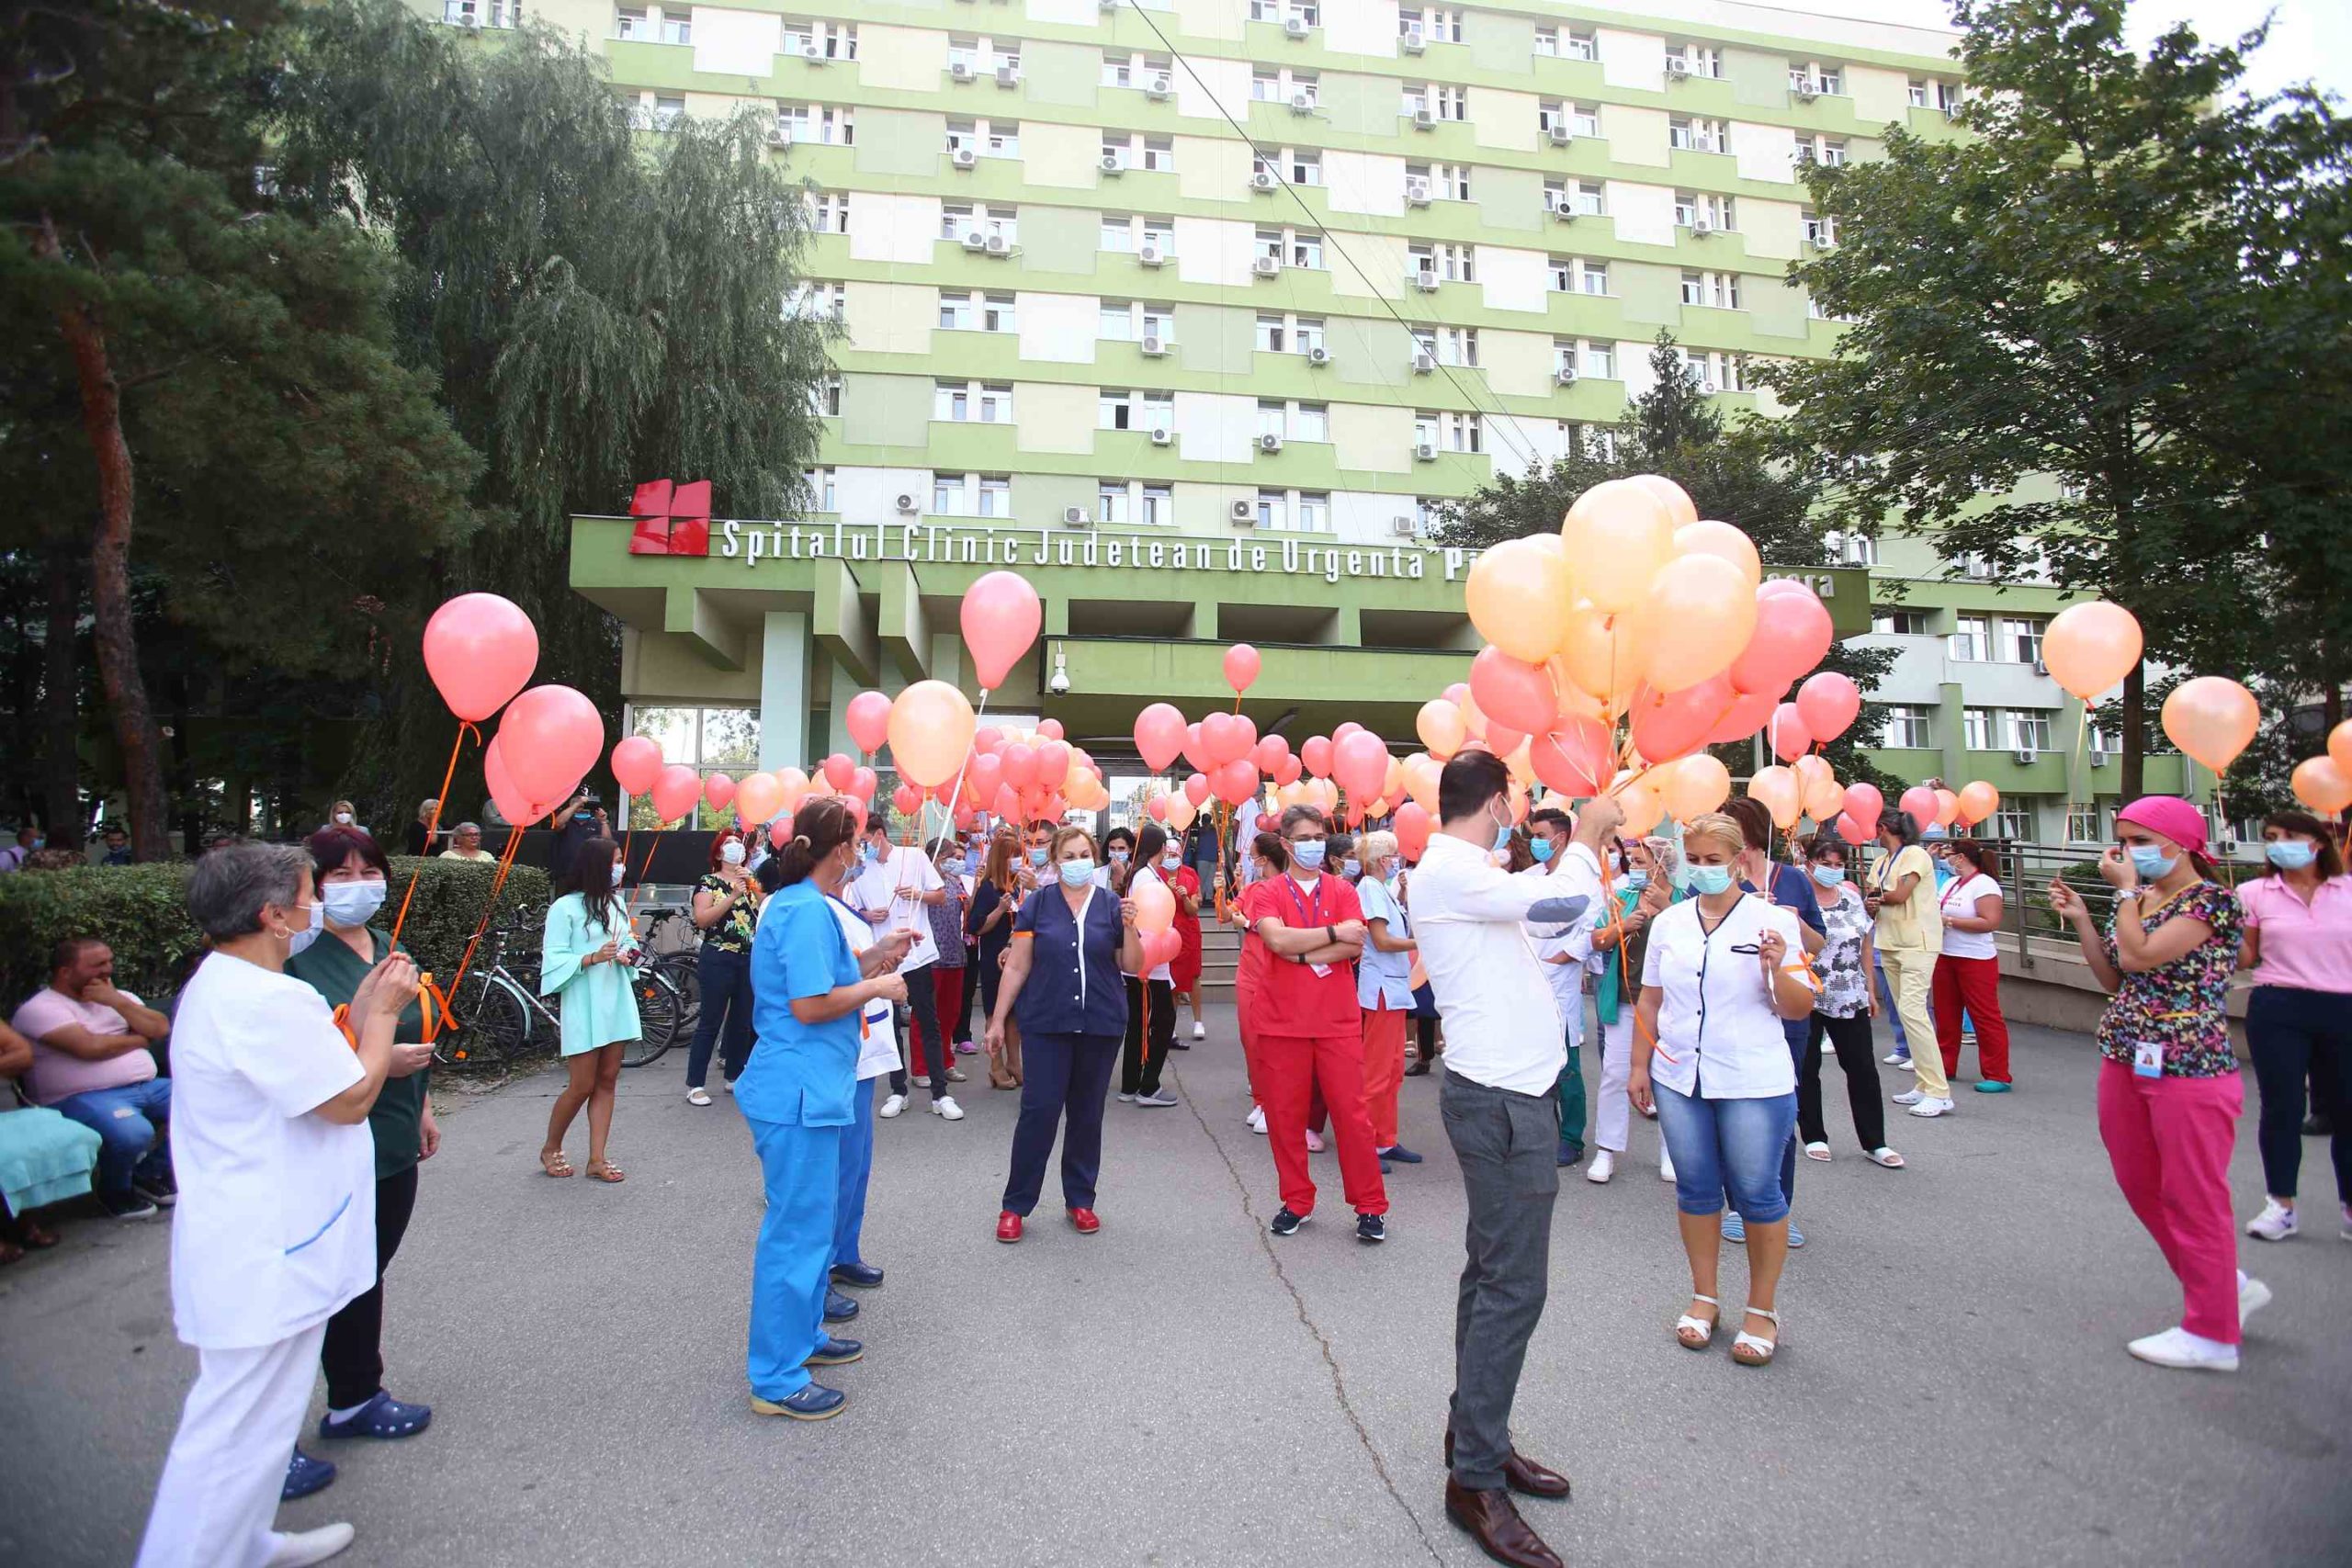 spitalul judetean baloane (8)